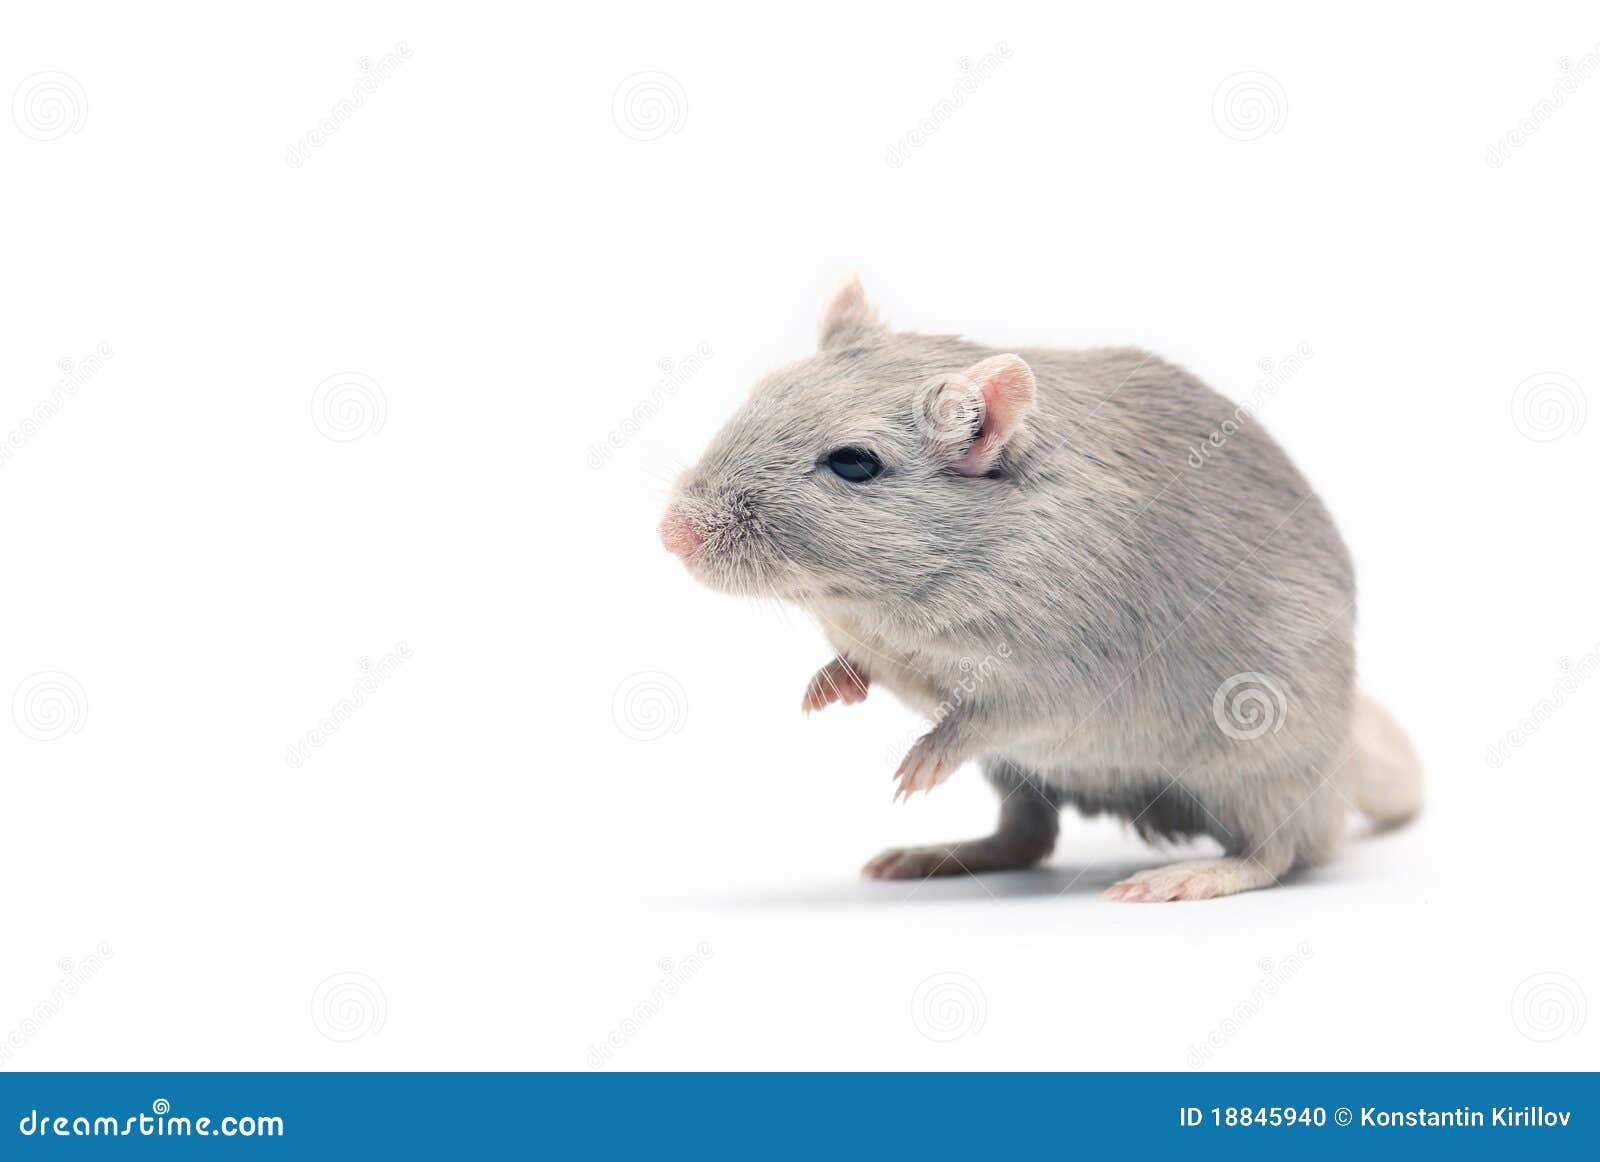 Серая мышь 14